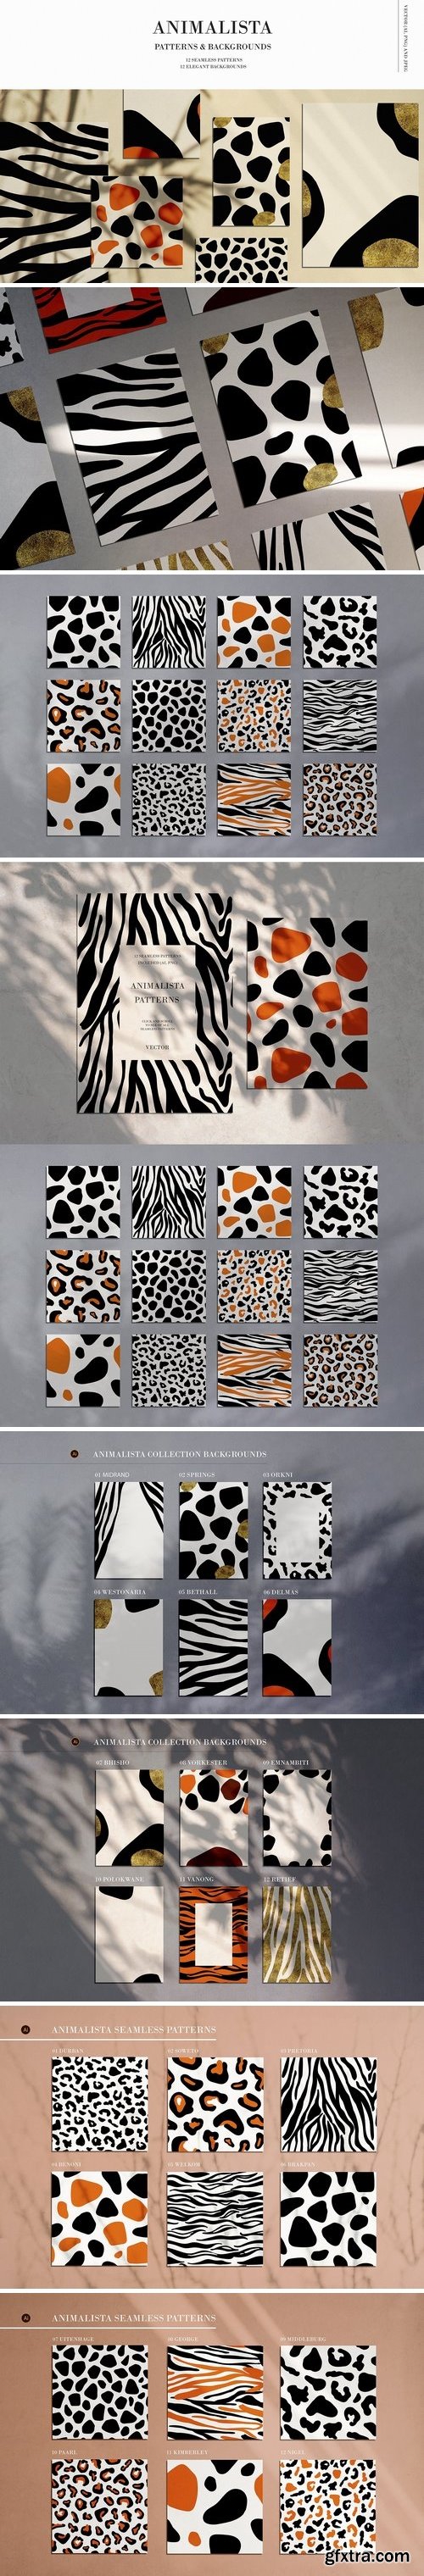 CM - Animalista - patterns collection 3515002